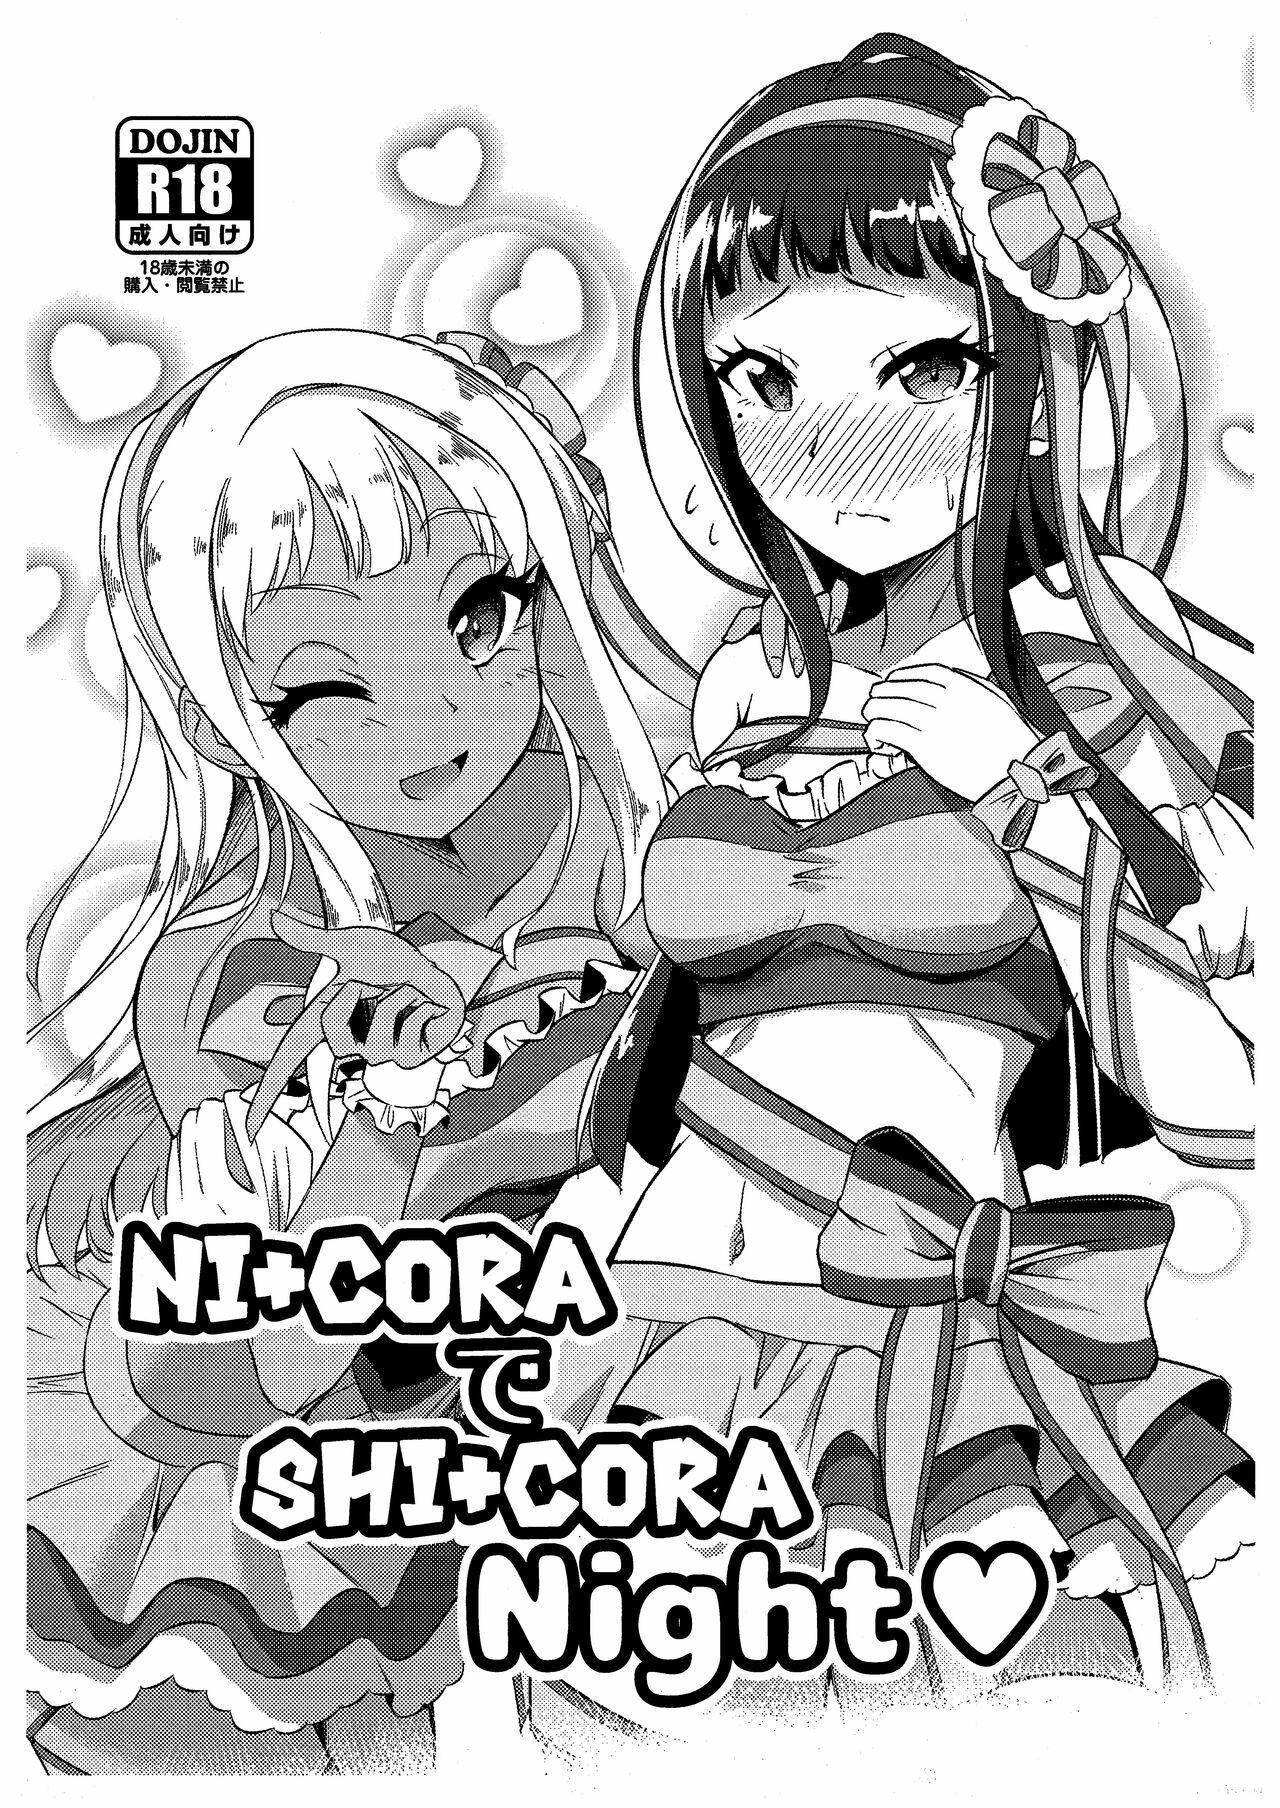 Culito NI+CORA de SHI+CORA Night - Tokyo 7th sisters Phat - Page 1